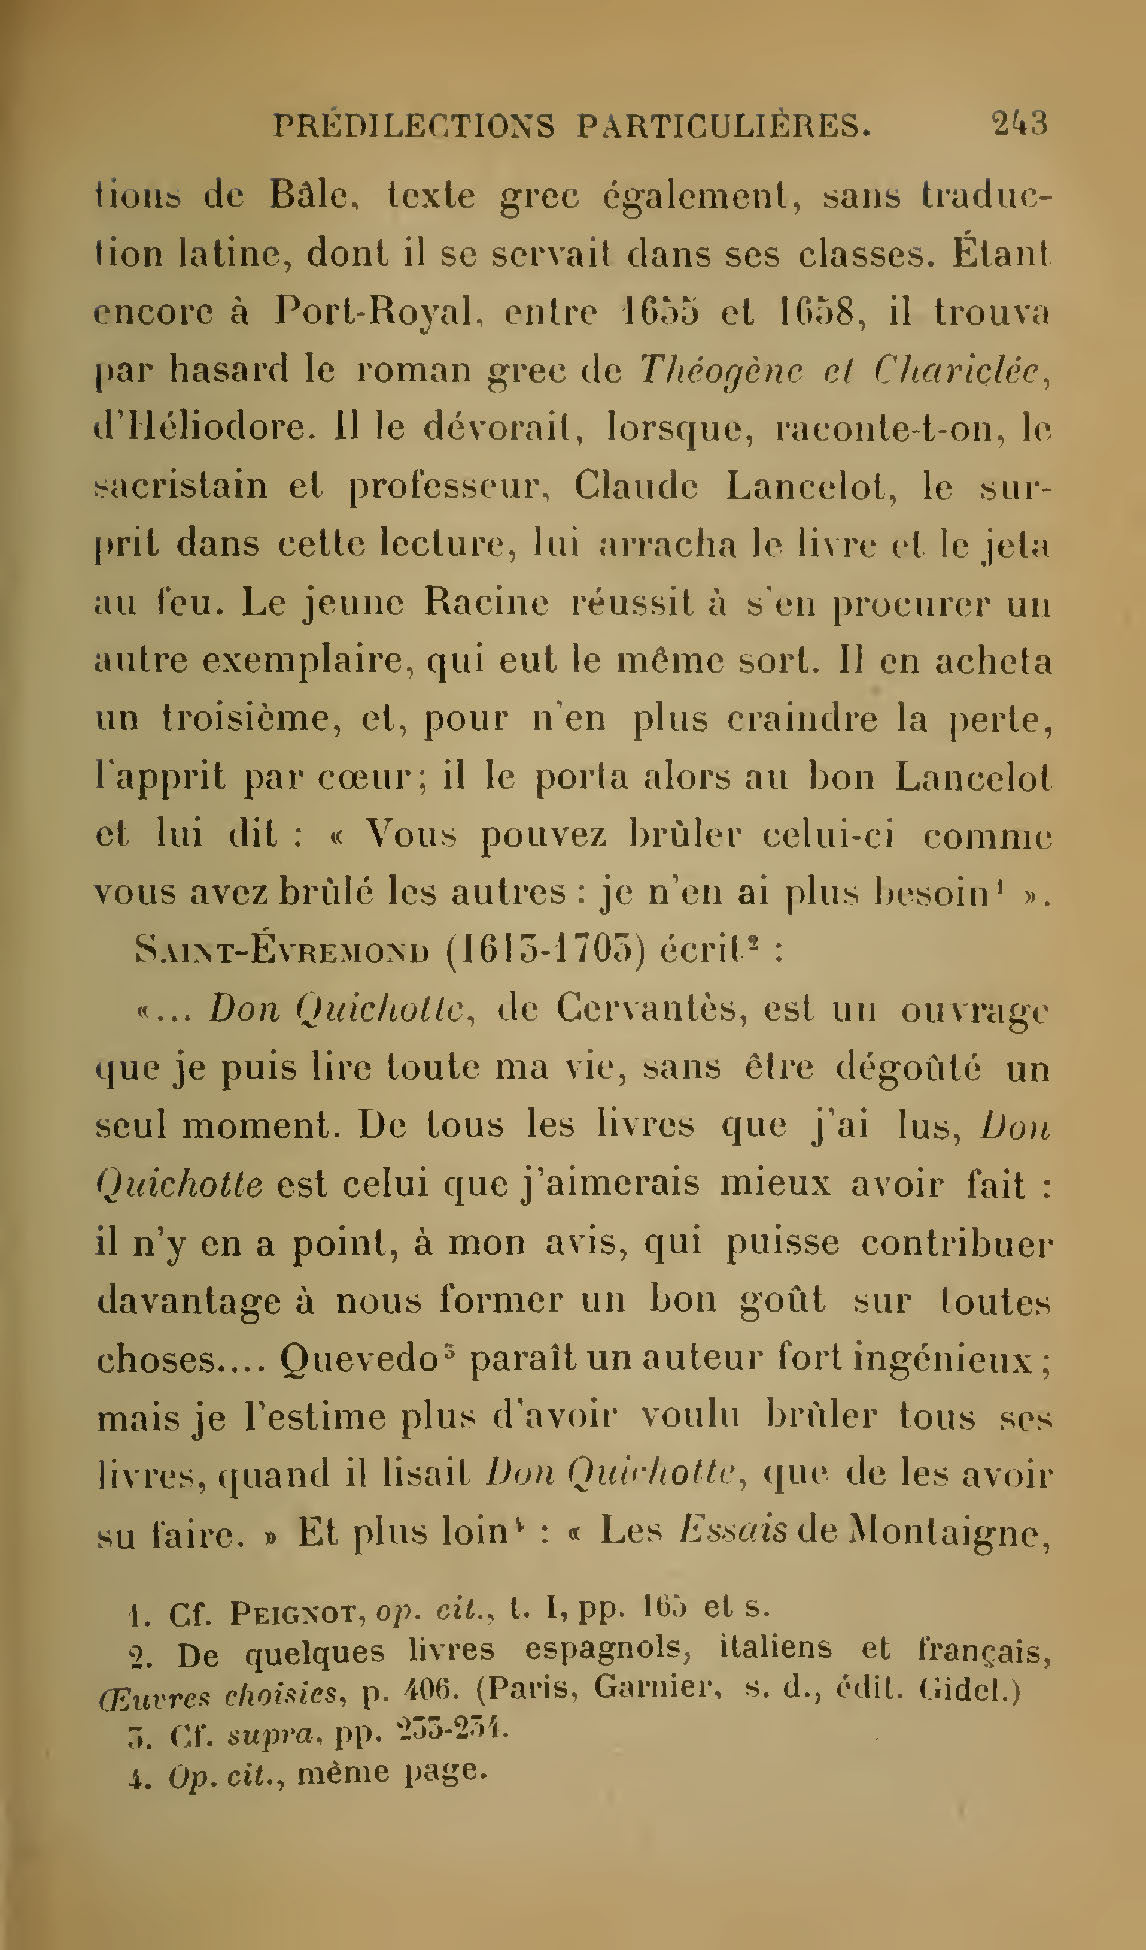 Albert Cim, Le Livre, t. I, p. 243.